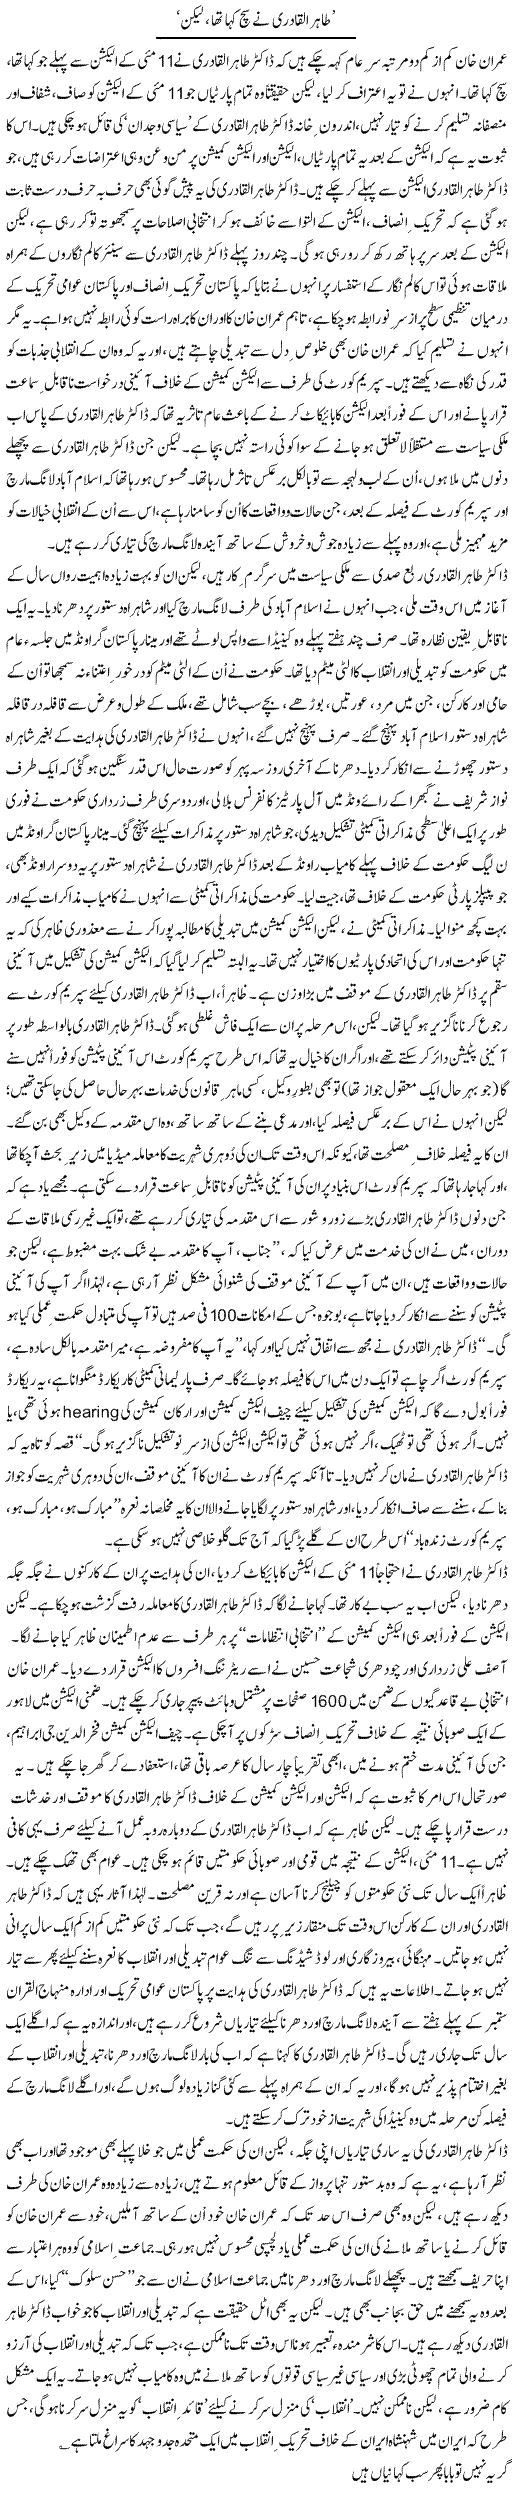 Tahir Ul Qadiri Ne Sach Kaha Tha Laikin | Asghar Abdullah | Daily Urdu Columns